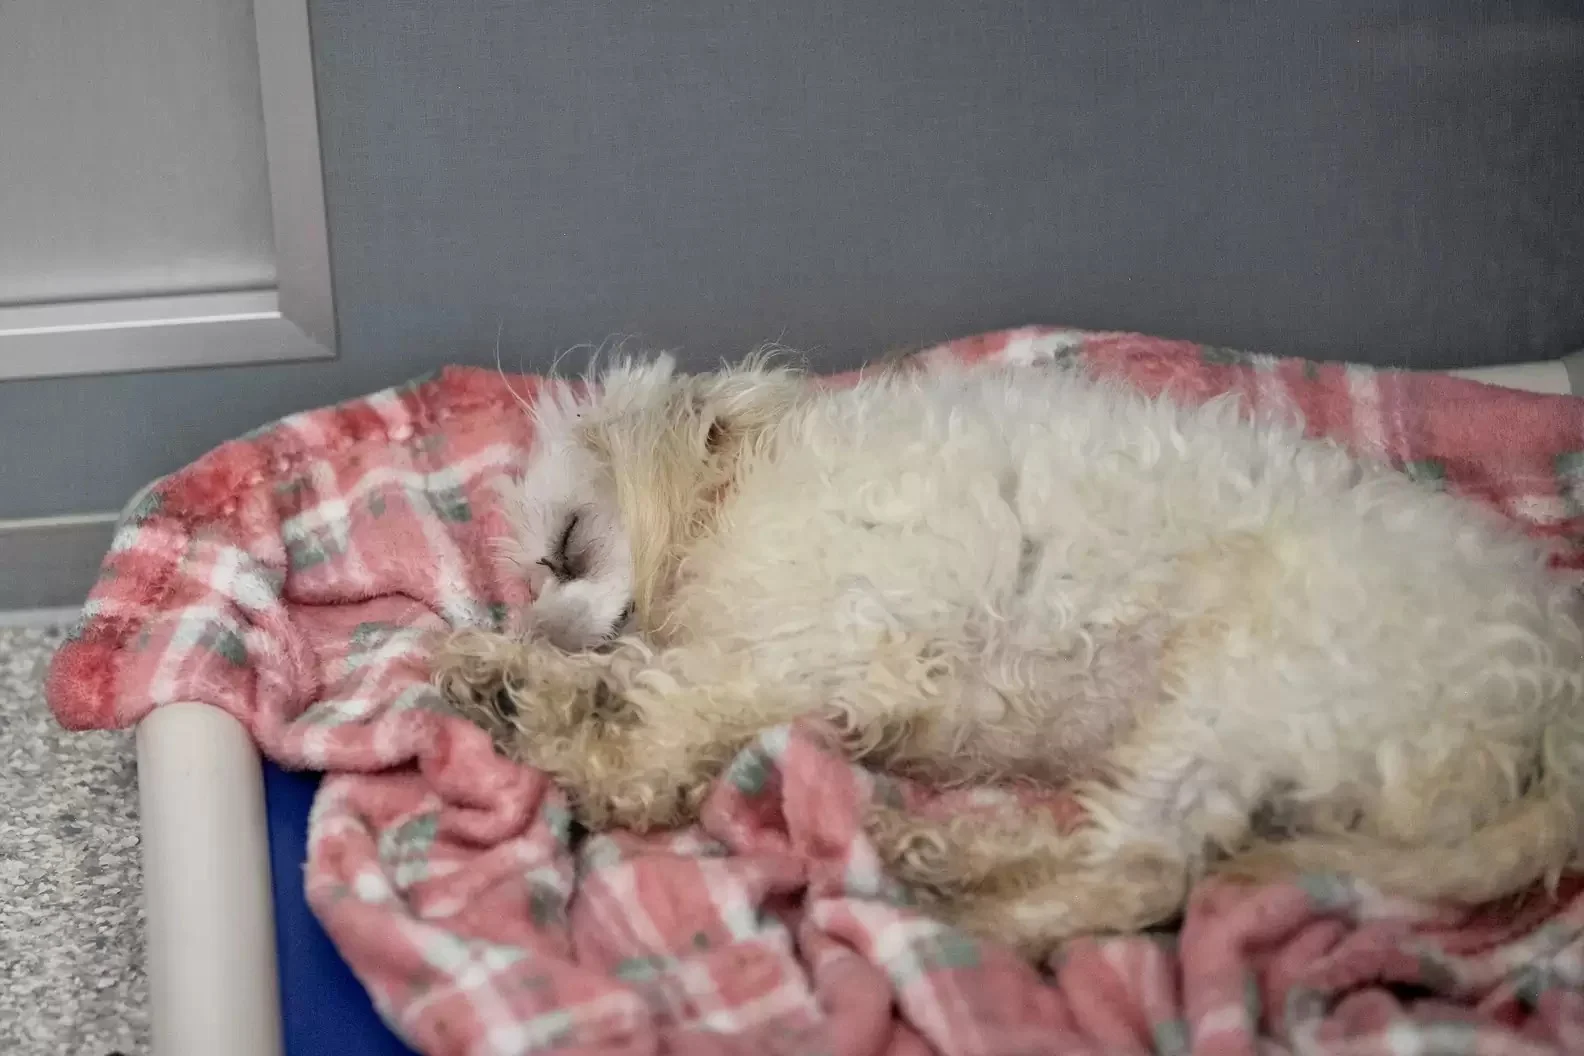 a shaggy white dog sleeps on a pink blanket